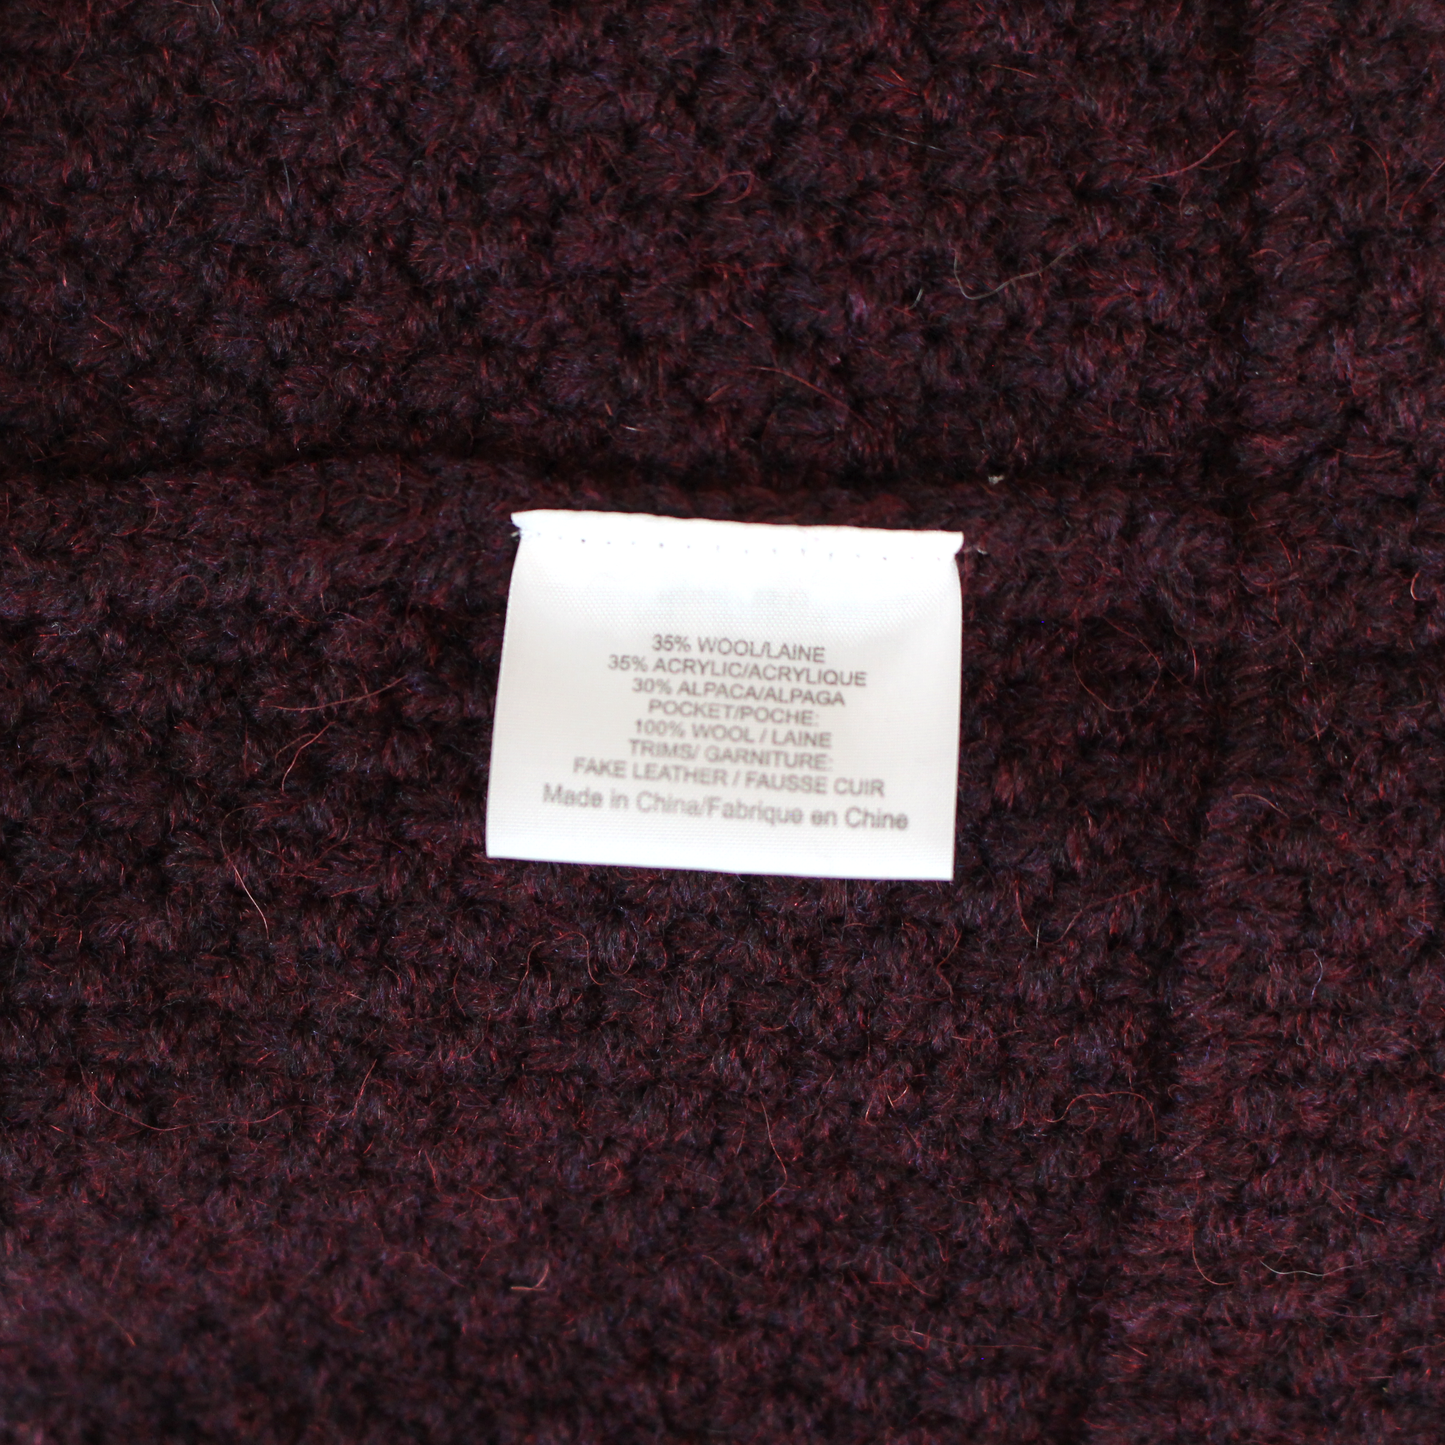 Tory Burch Colette Sweater Coat